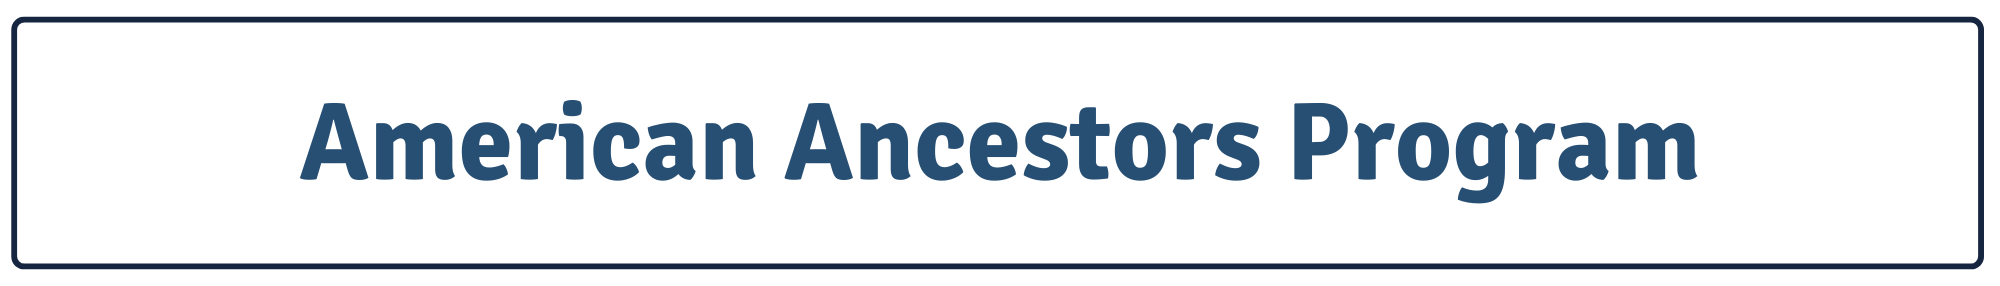 American Ancestors section header